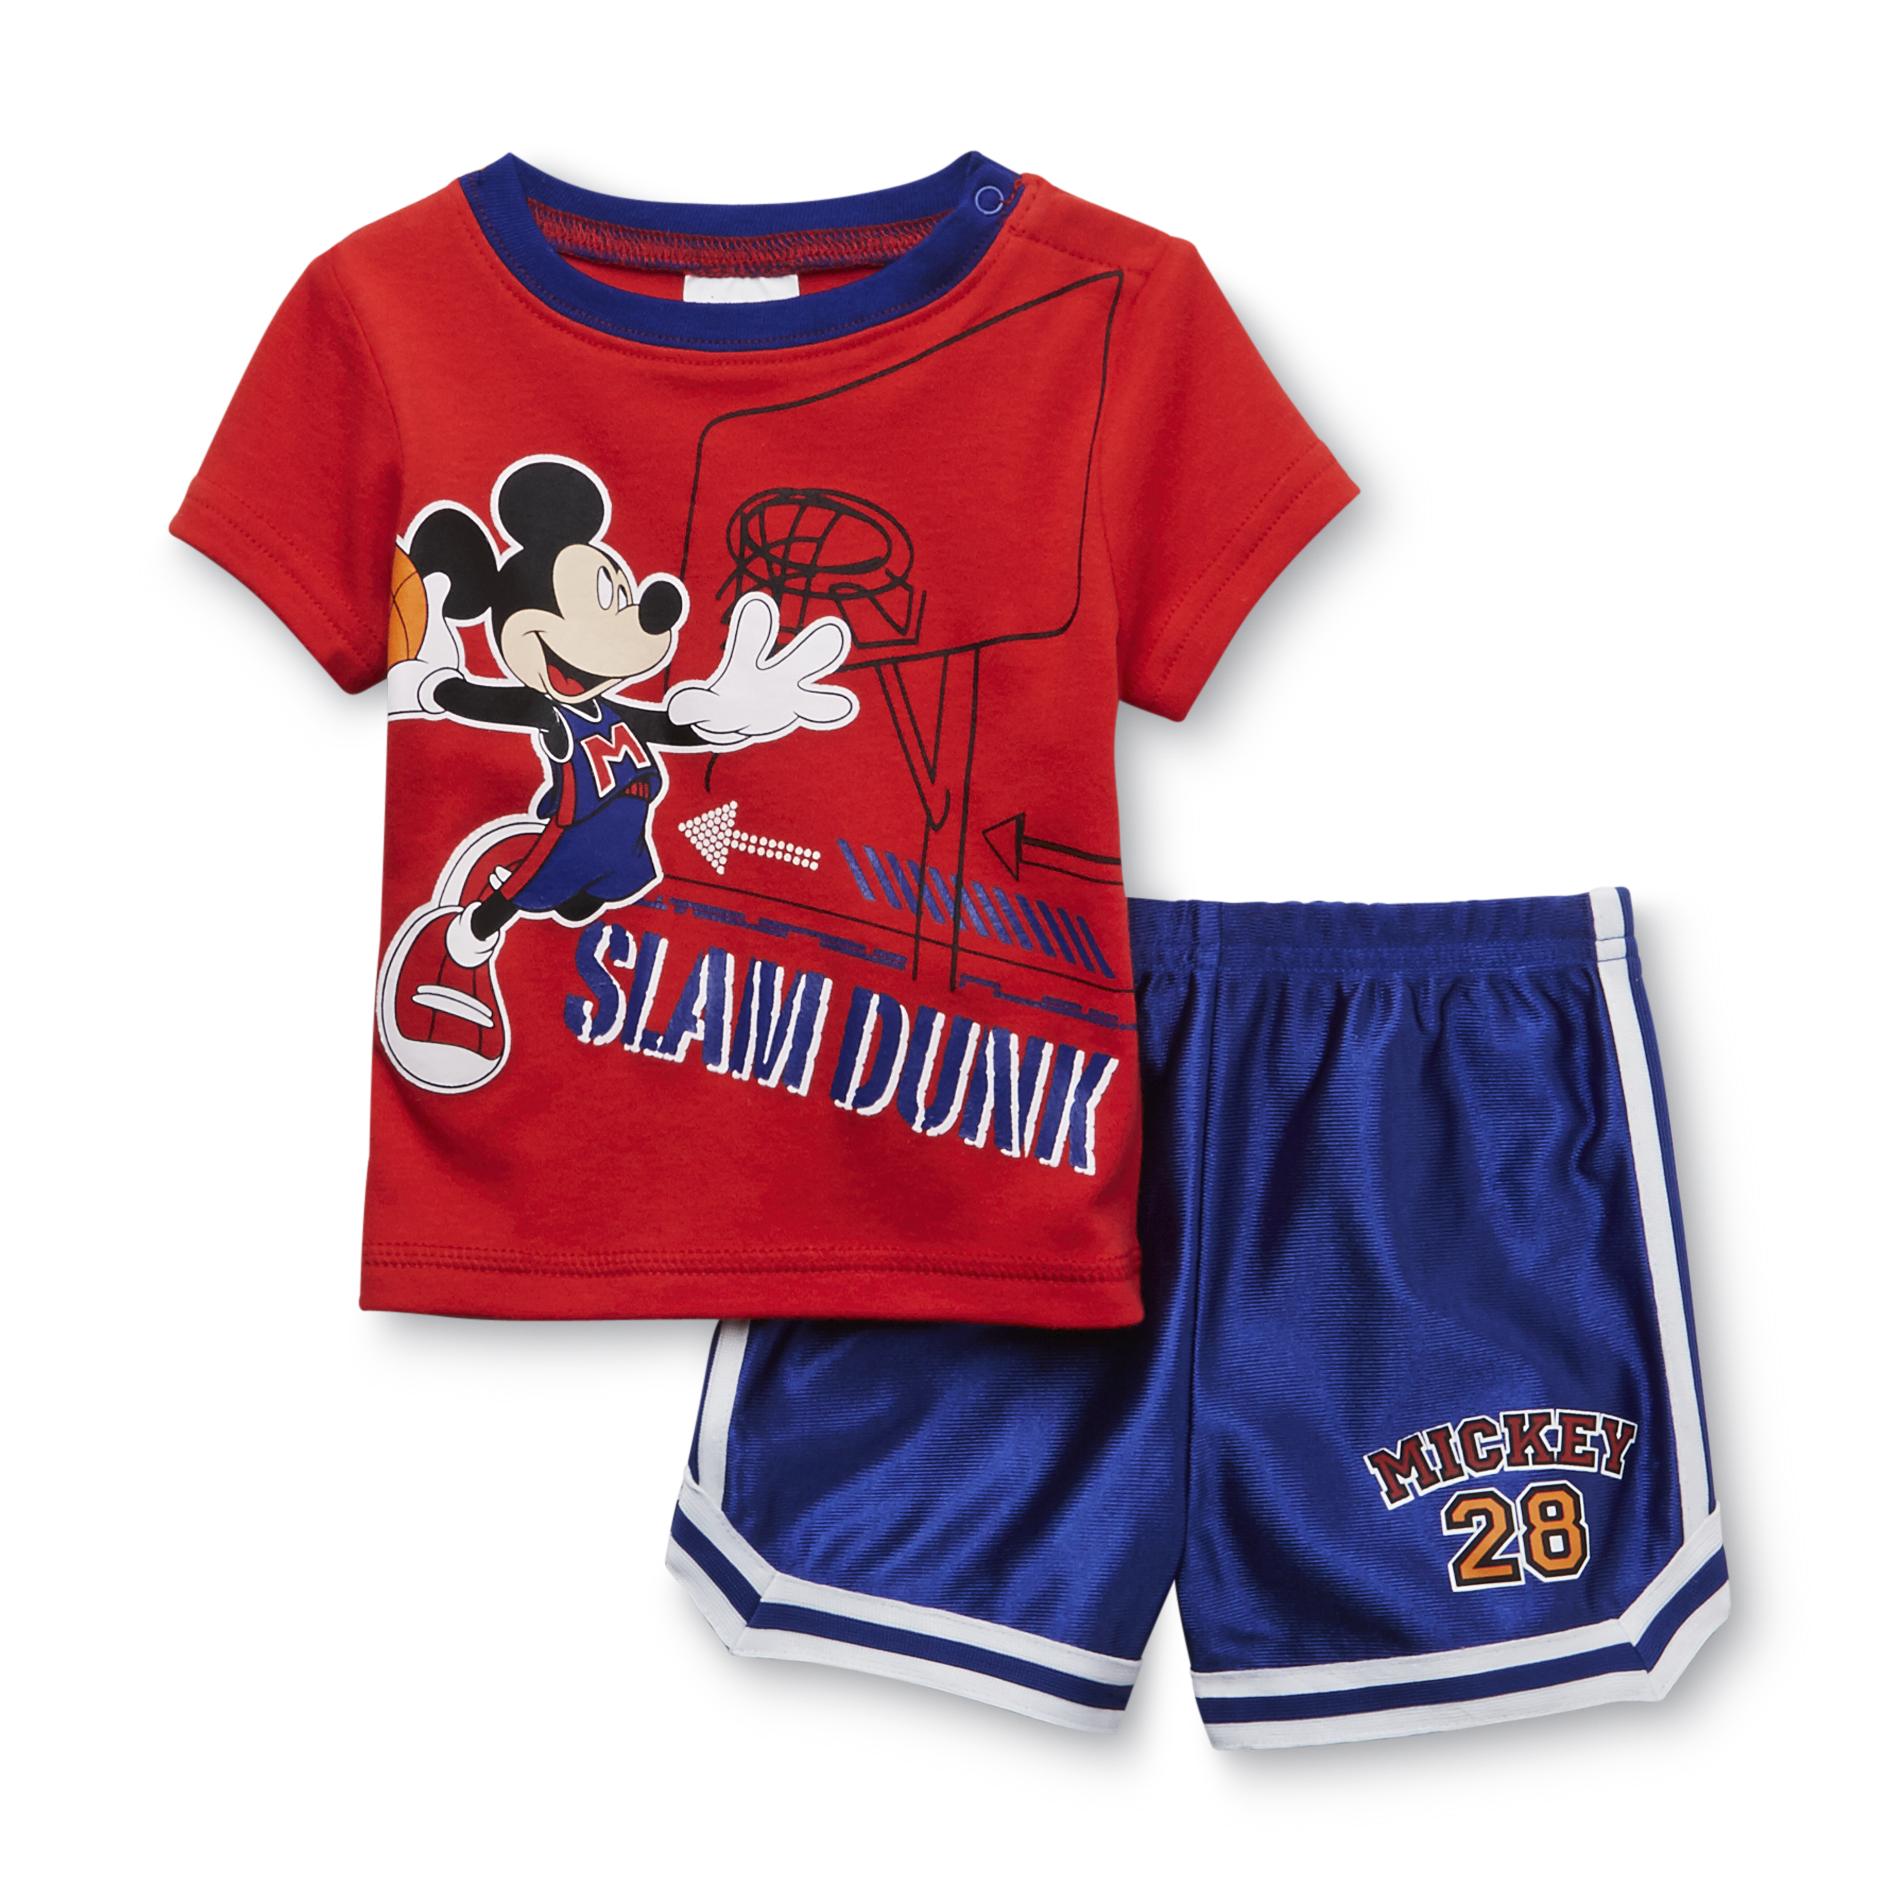 Disney Newborn Boy's Shirt & Shorts Set - Mickey Mouse Basketball